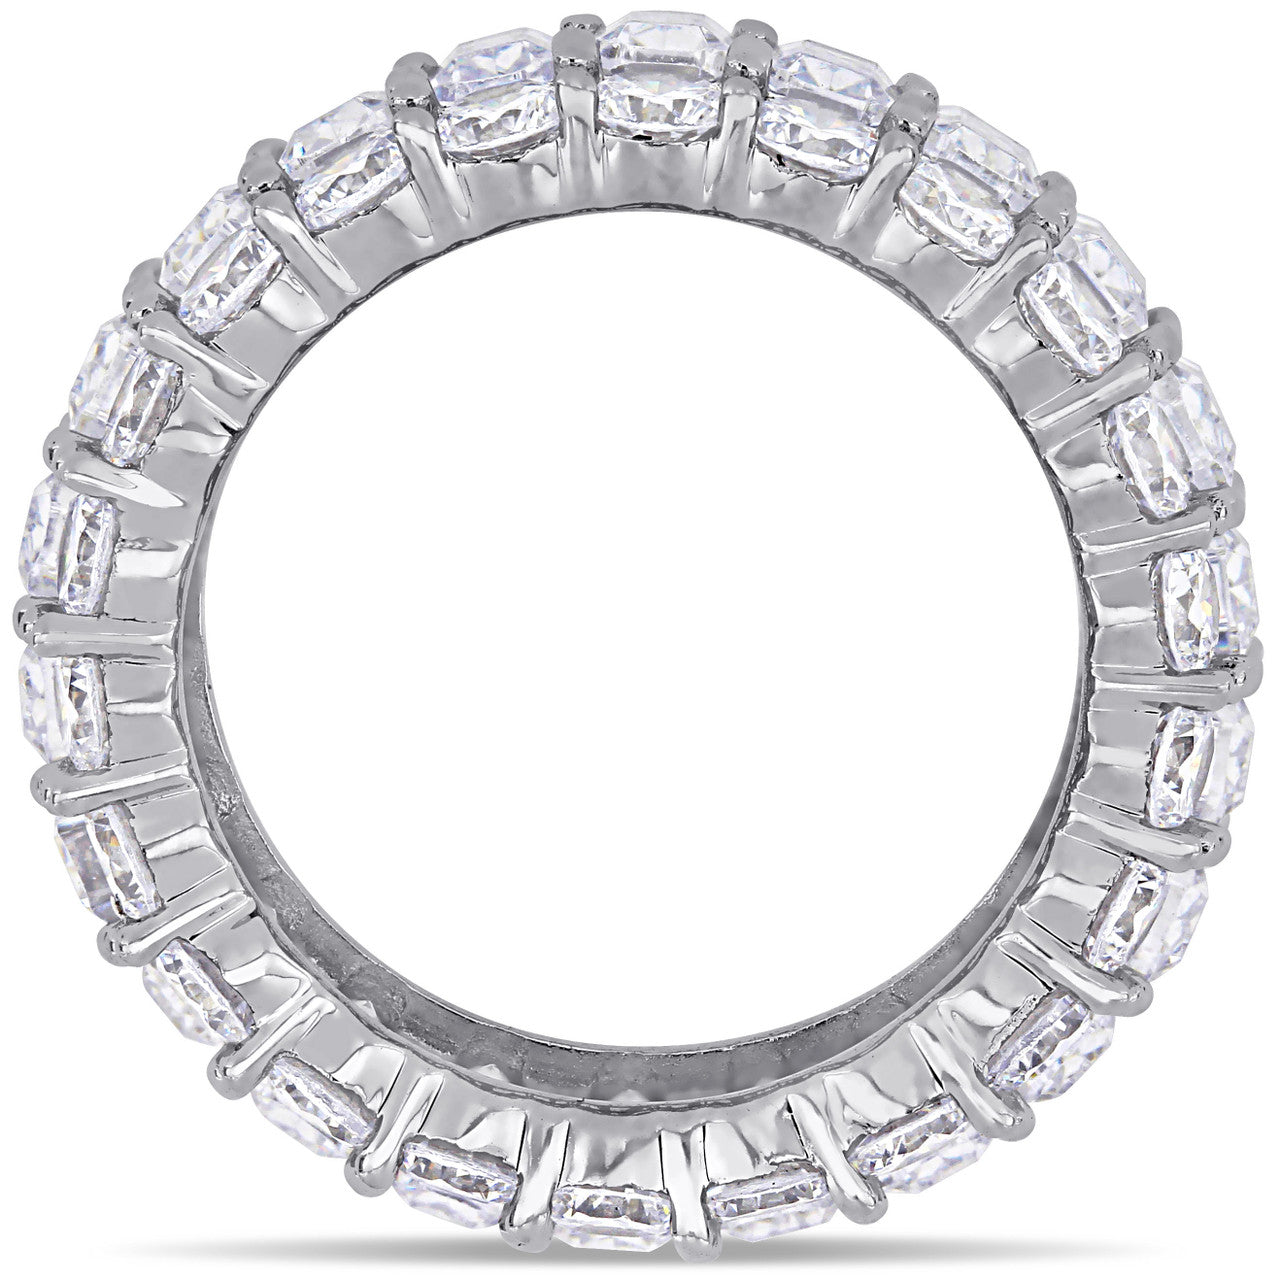 Saint Jewellery 19ct CZ Full Eternity Ring - 75000004624 | Ice Jewellery Australia